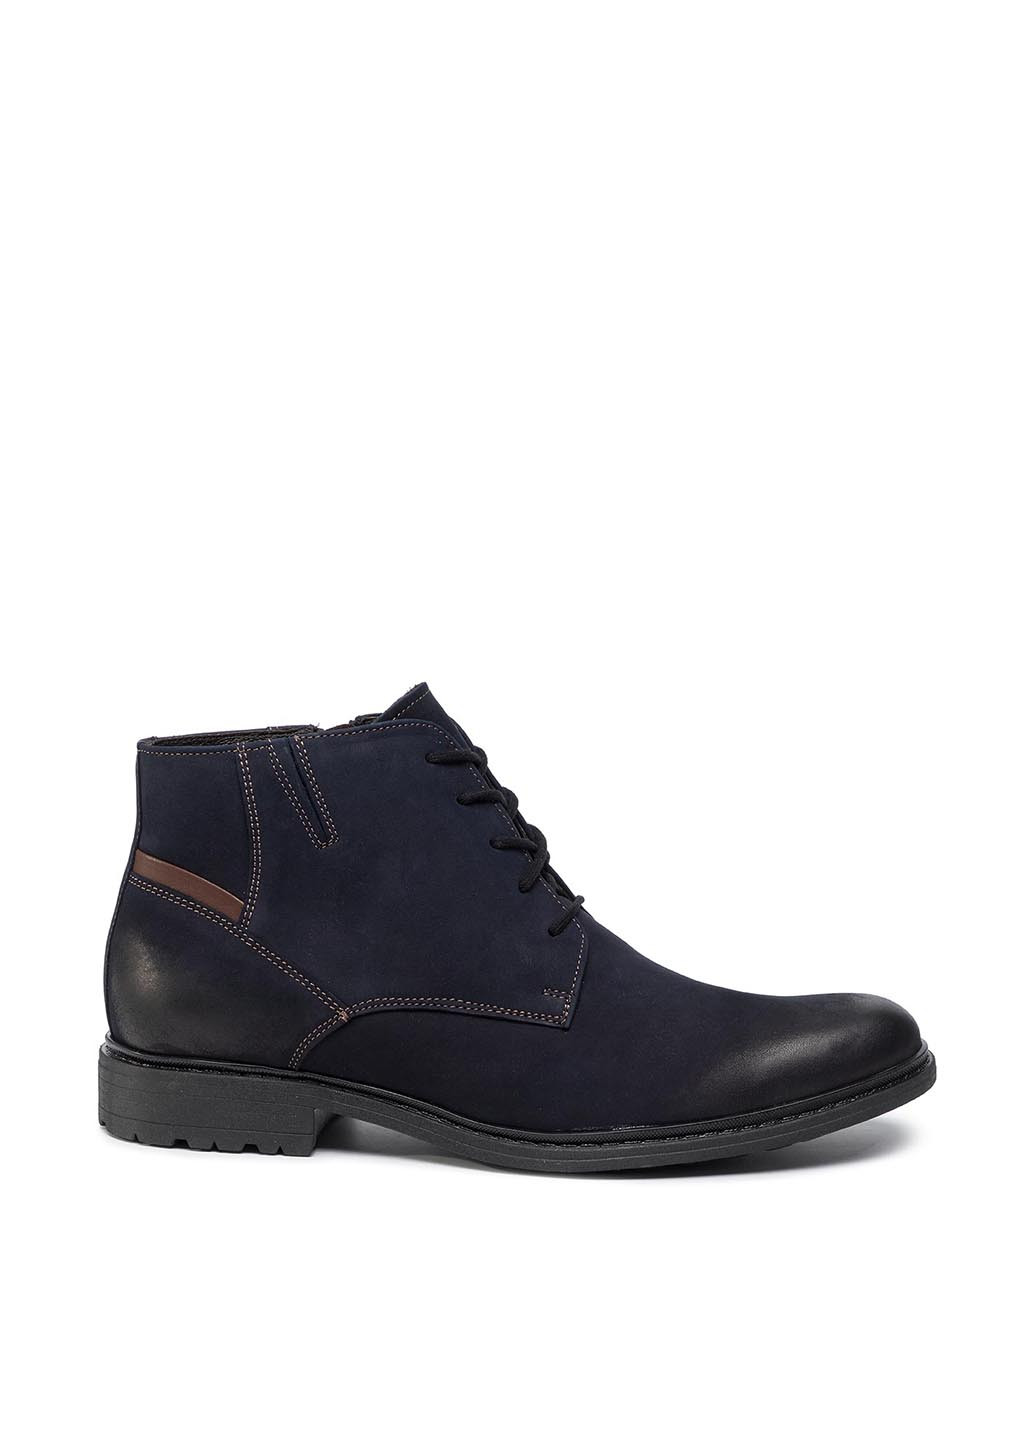 Темно-синие зимние черевики lasocki for men sm-ta-2366-082-332 Lasocki for men